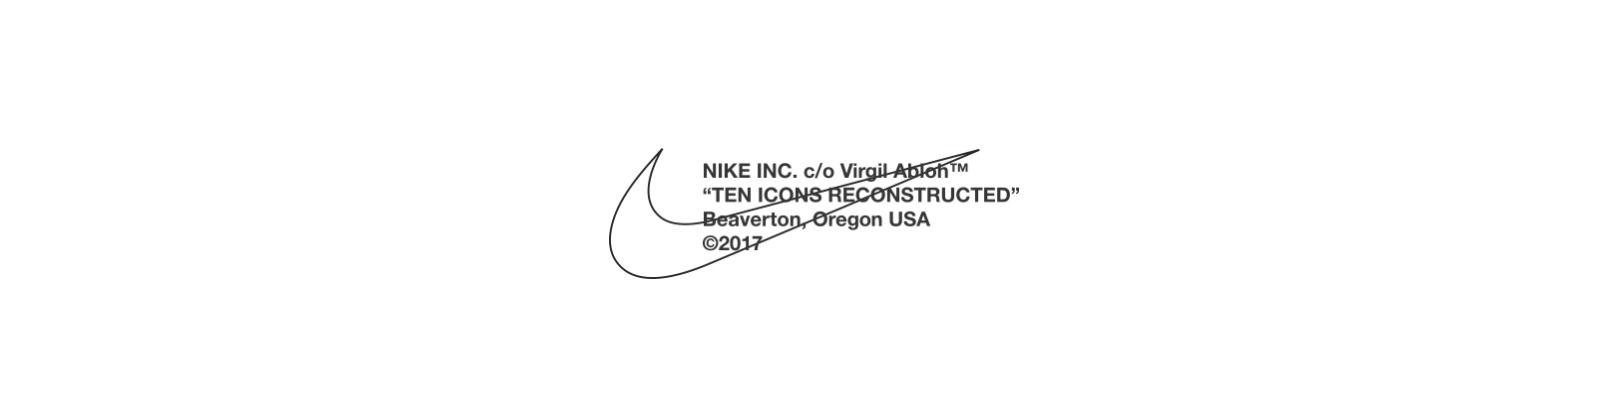 Nike X Off White Logo - LogoDix